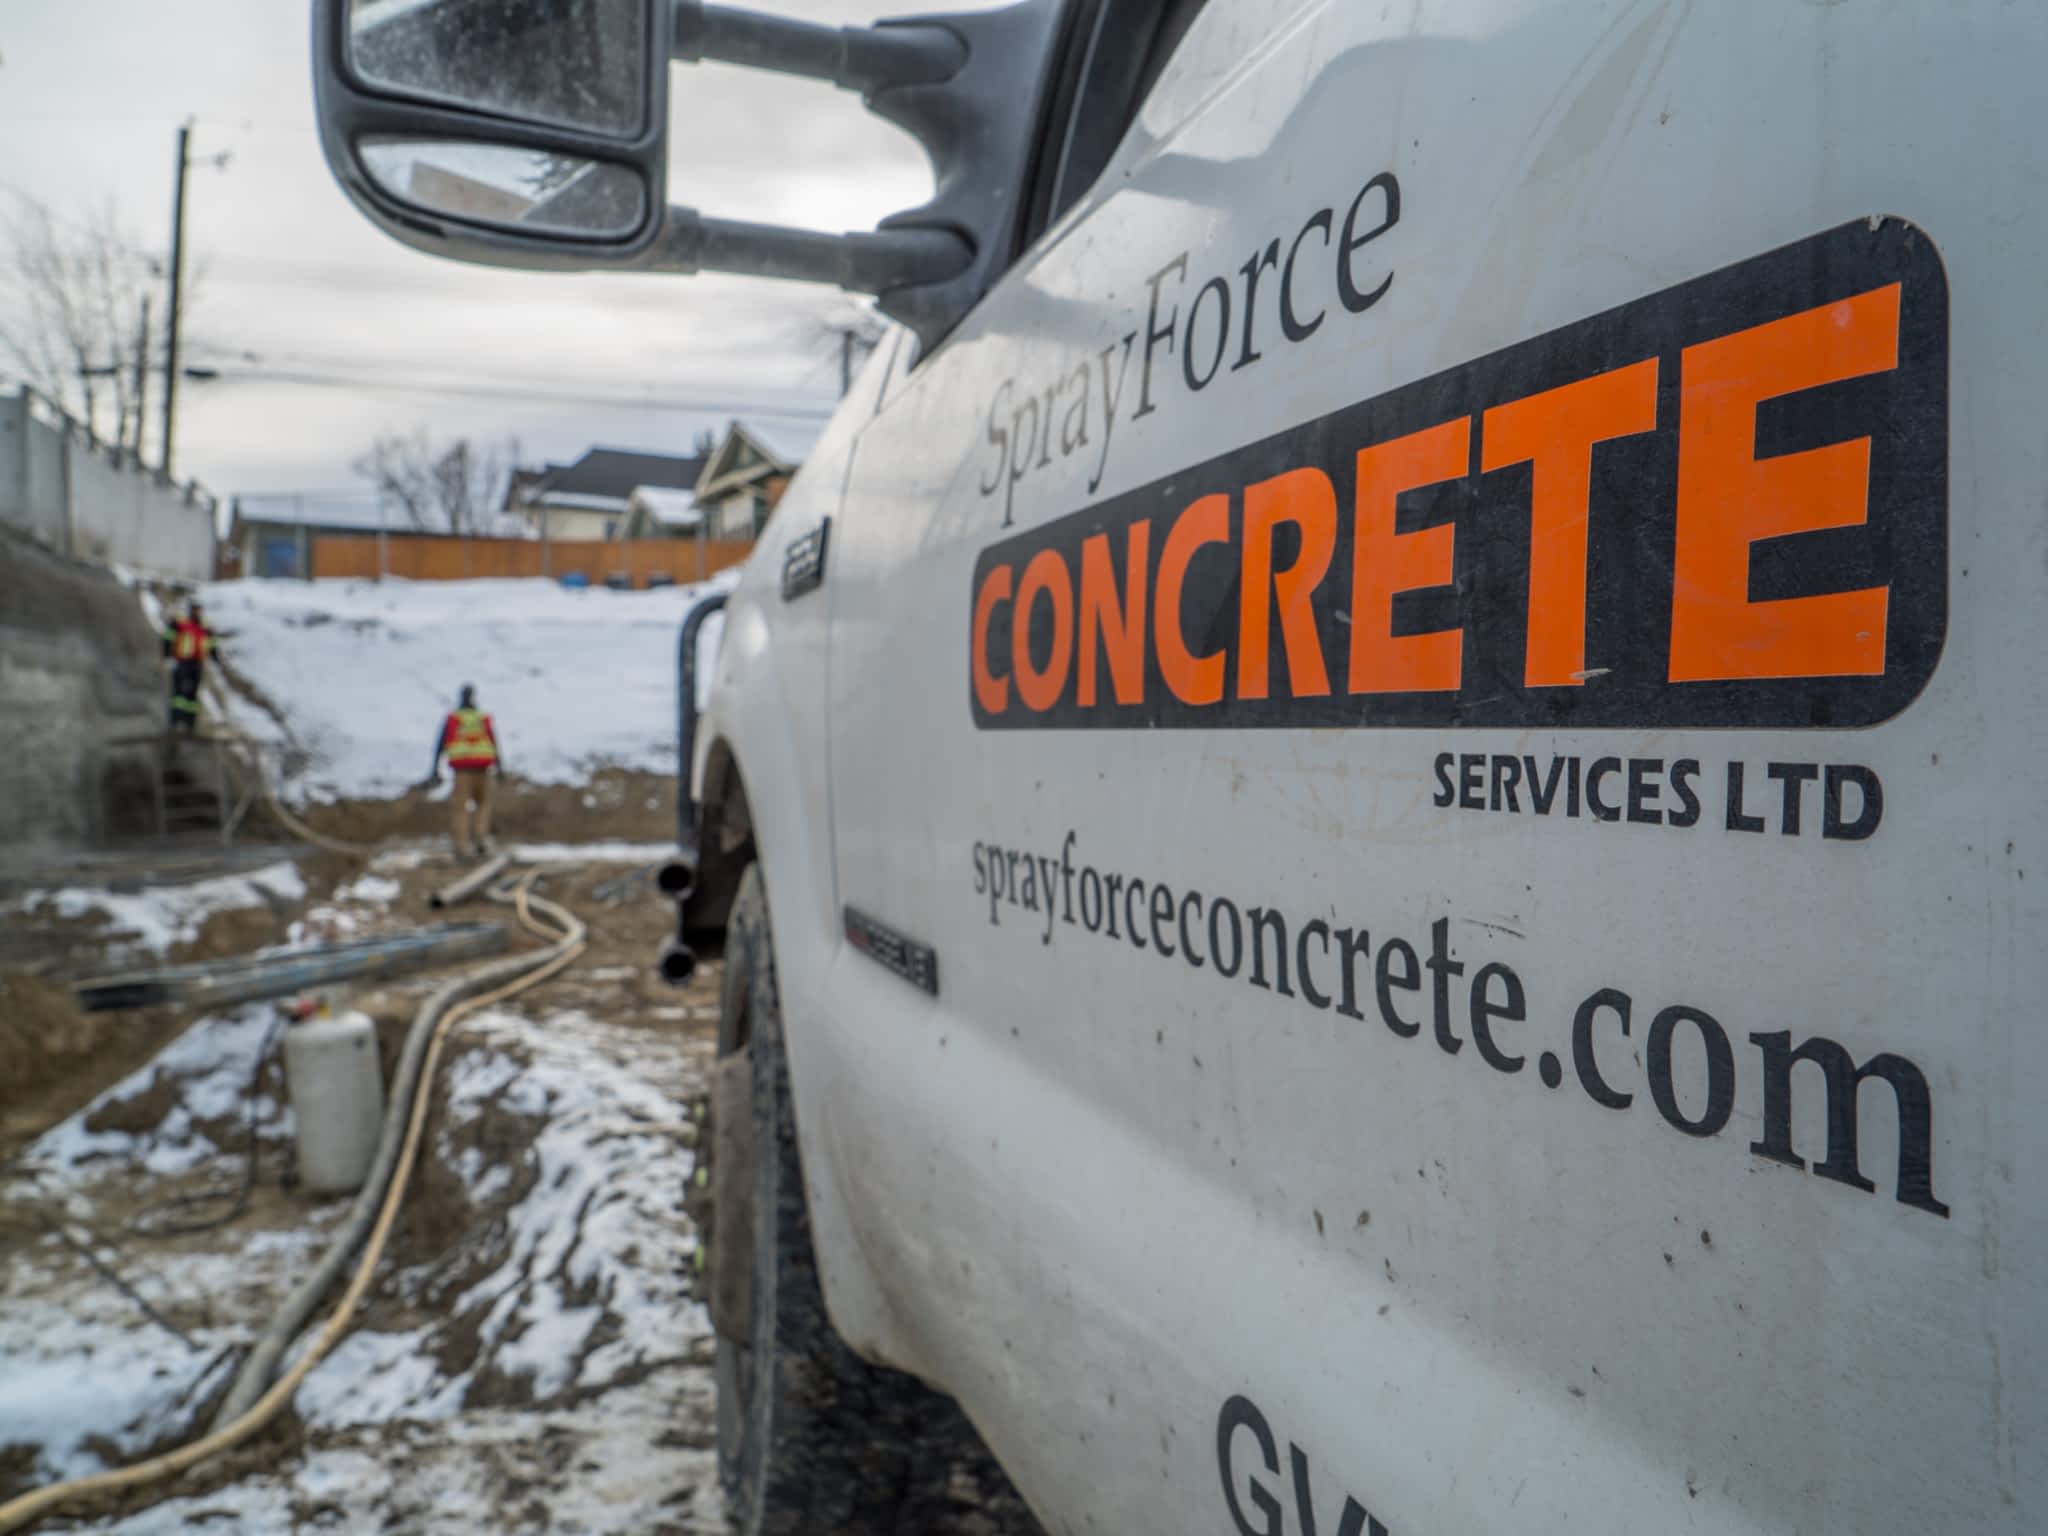 photo Sprayforce Concrete Services